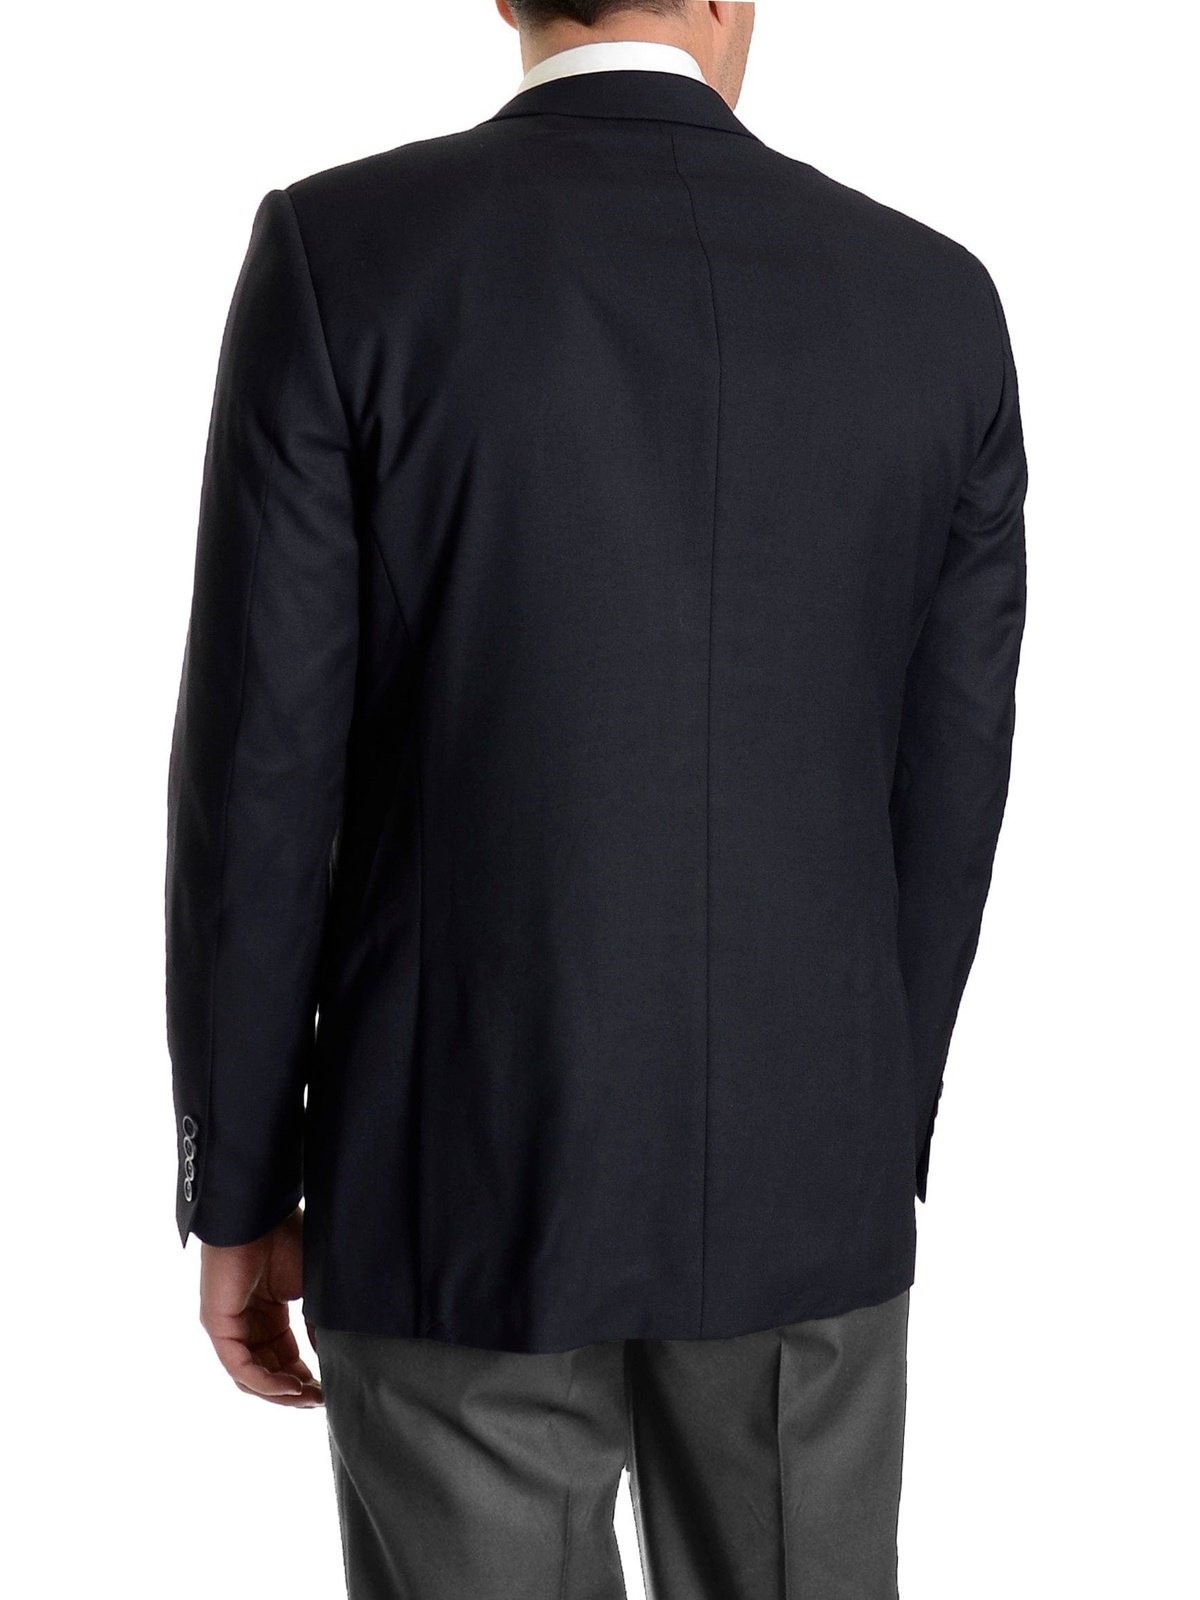 Raphael BLAZERS Raphael Slim Fit Solid Navy Blue Two Button Blazer Suit Jacket